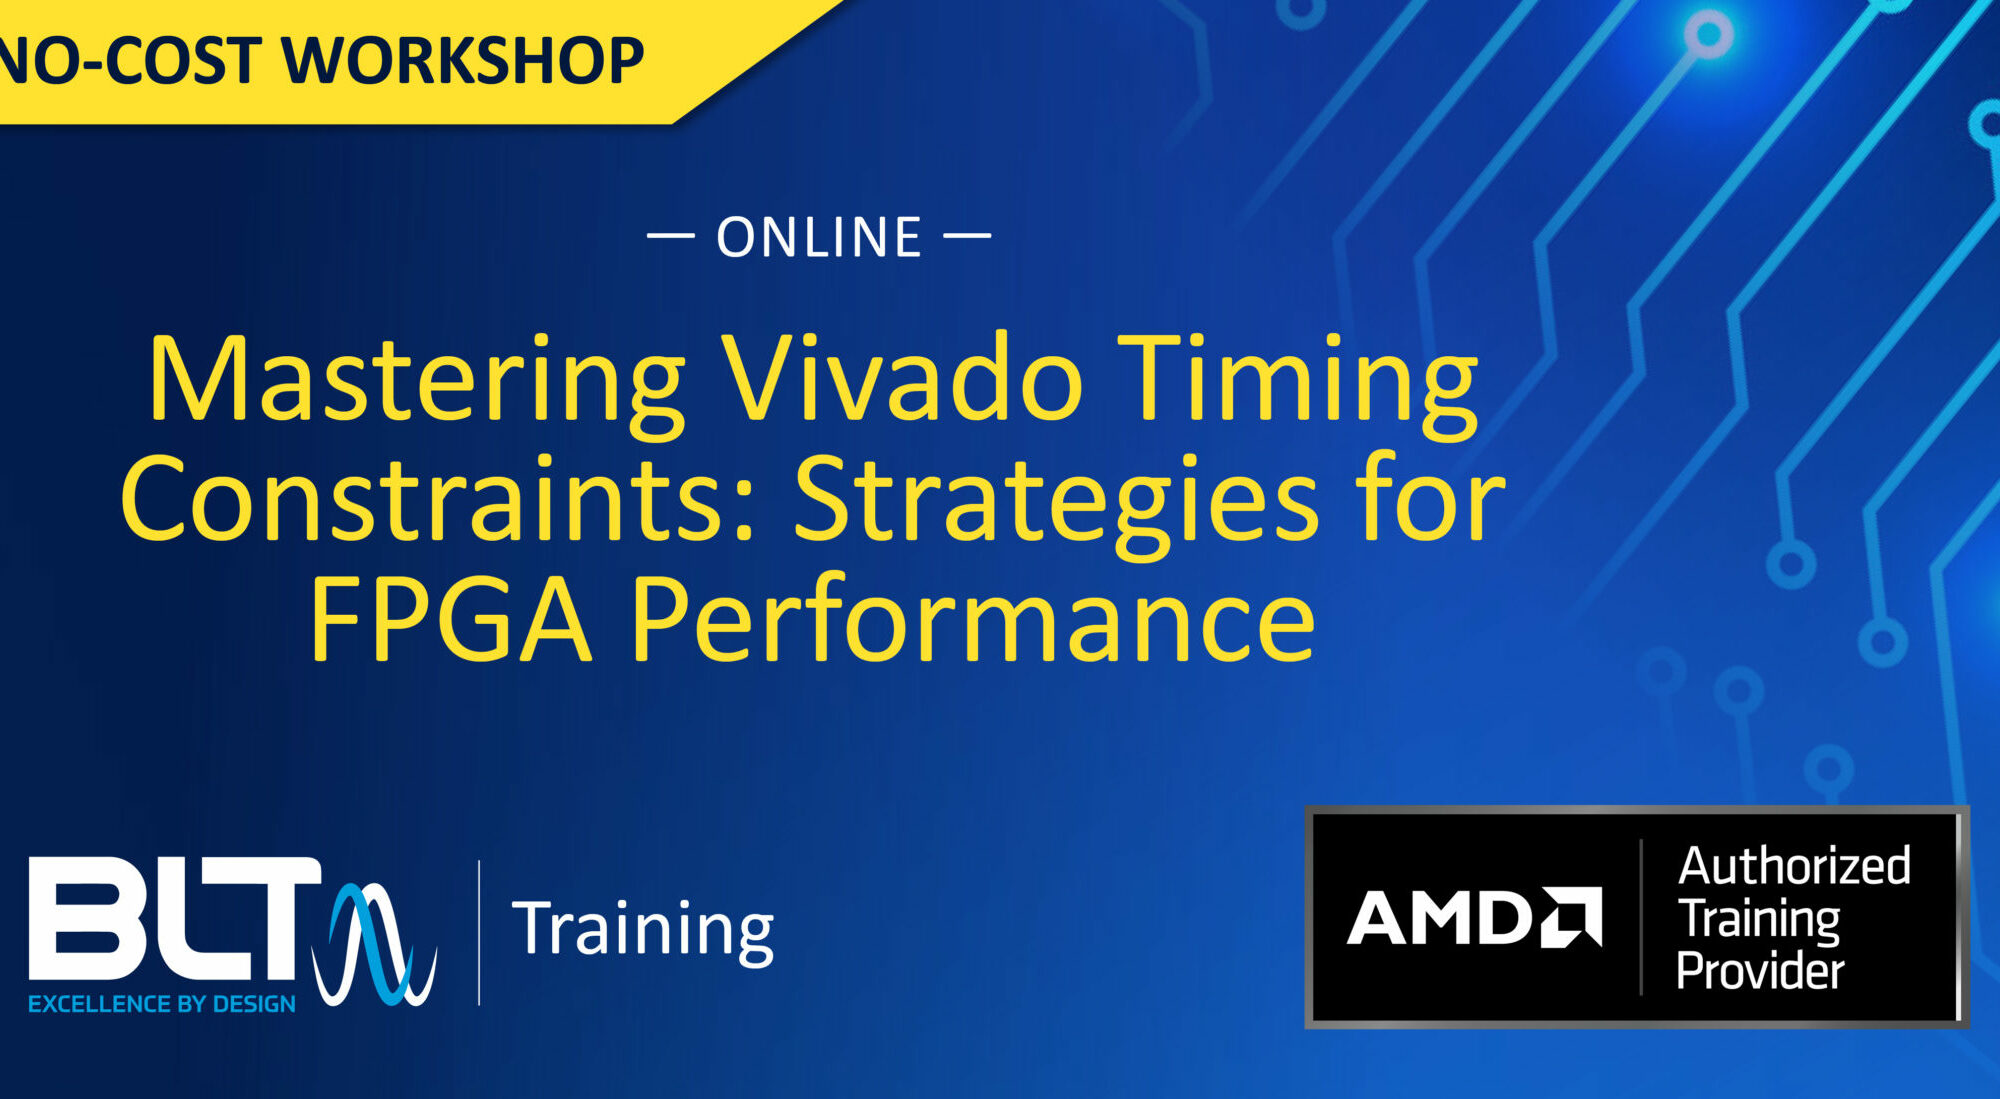 Vivado Timing Constraints Workshop